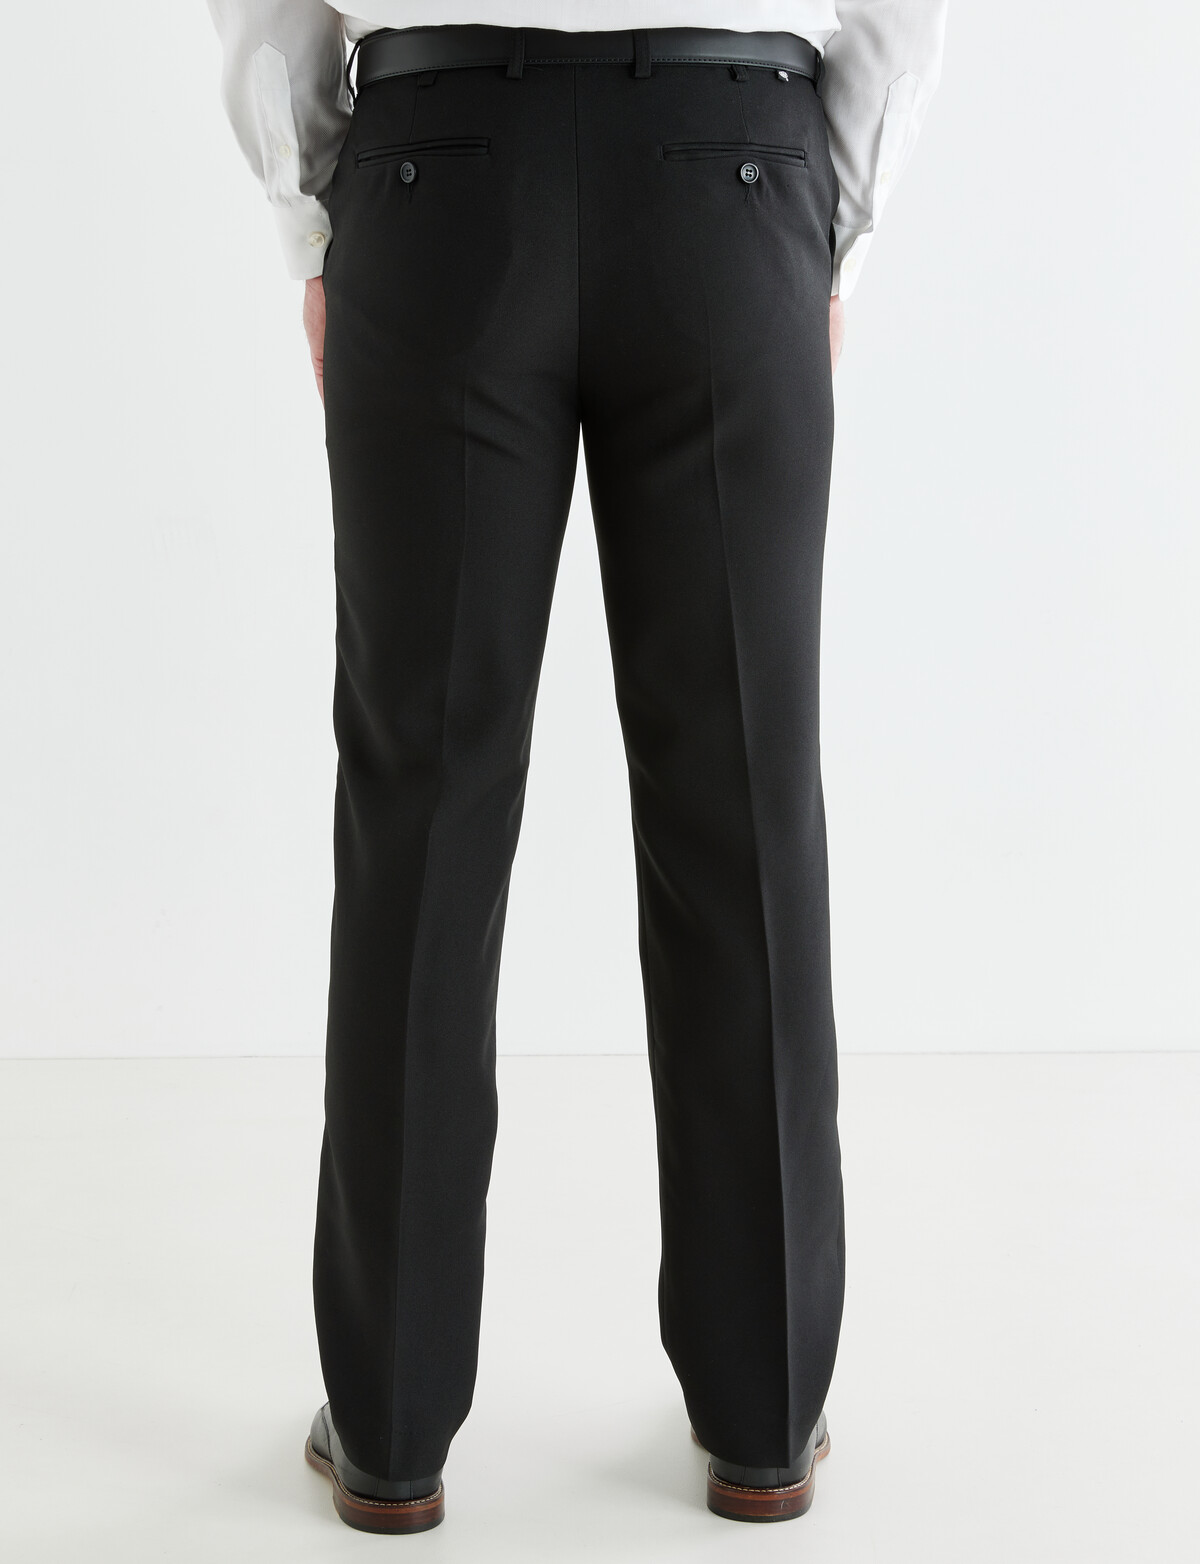 KINGSMAN Formal Pants & Trousers for Men sale - discounted price |  FASHIOLA.ph